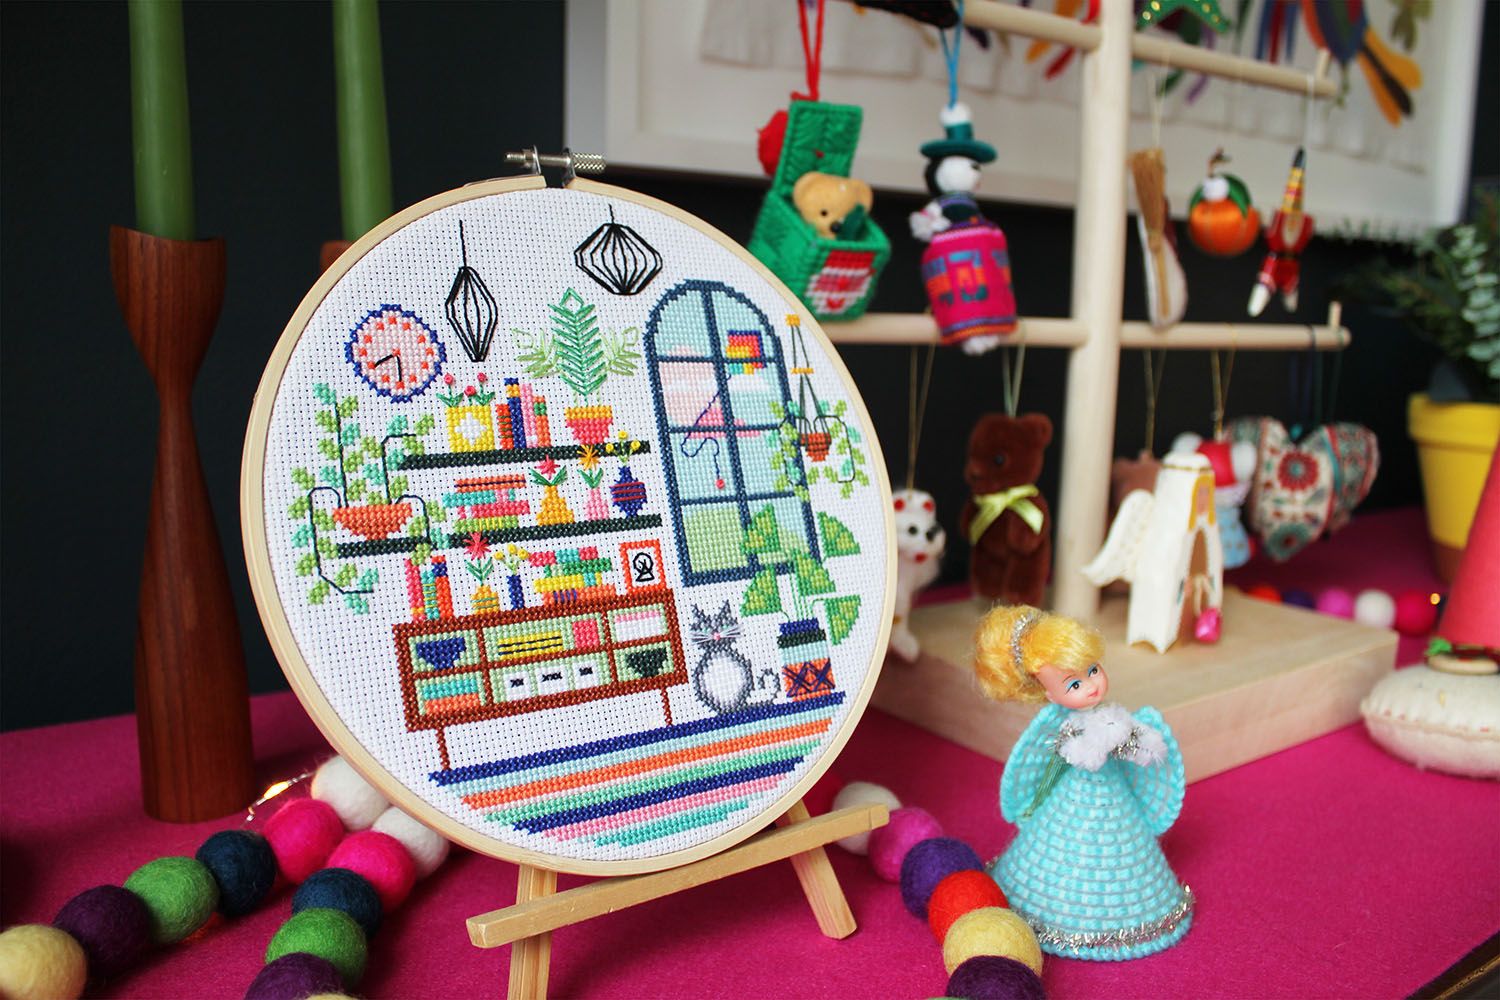 A framed cross-stitch on a table alongside colourful Christmas decorations